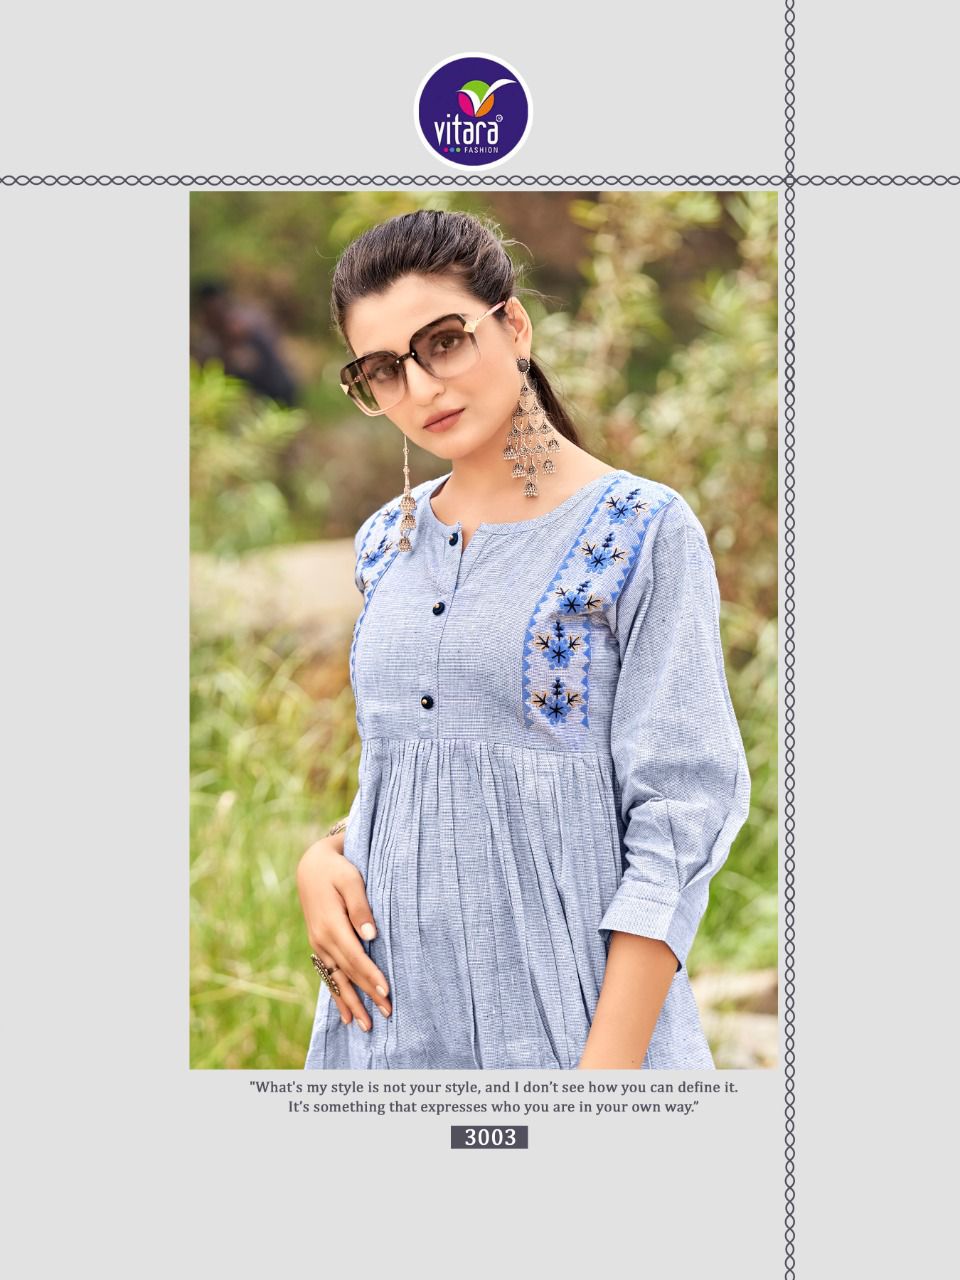 vitara fashion floret khadi cotton innovaive style kurti catalog